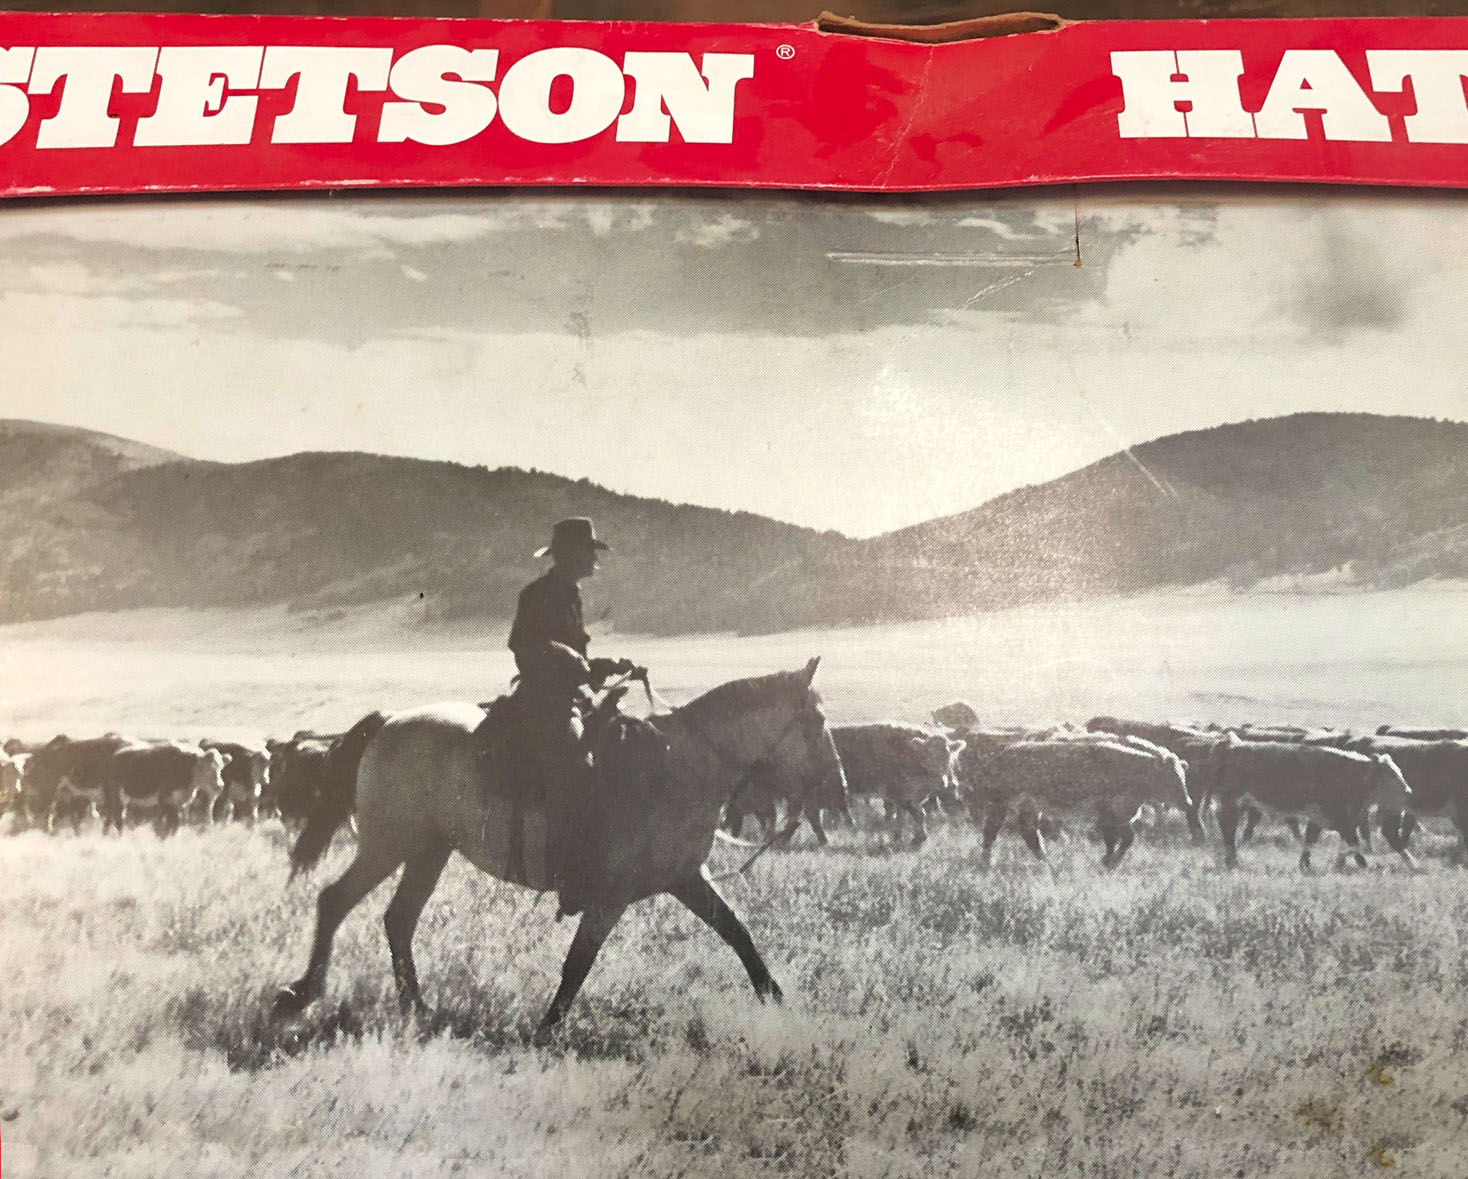 Steton Hat box with man riding a horse.